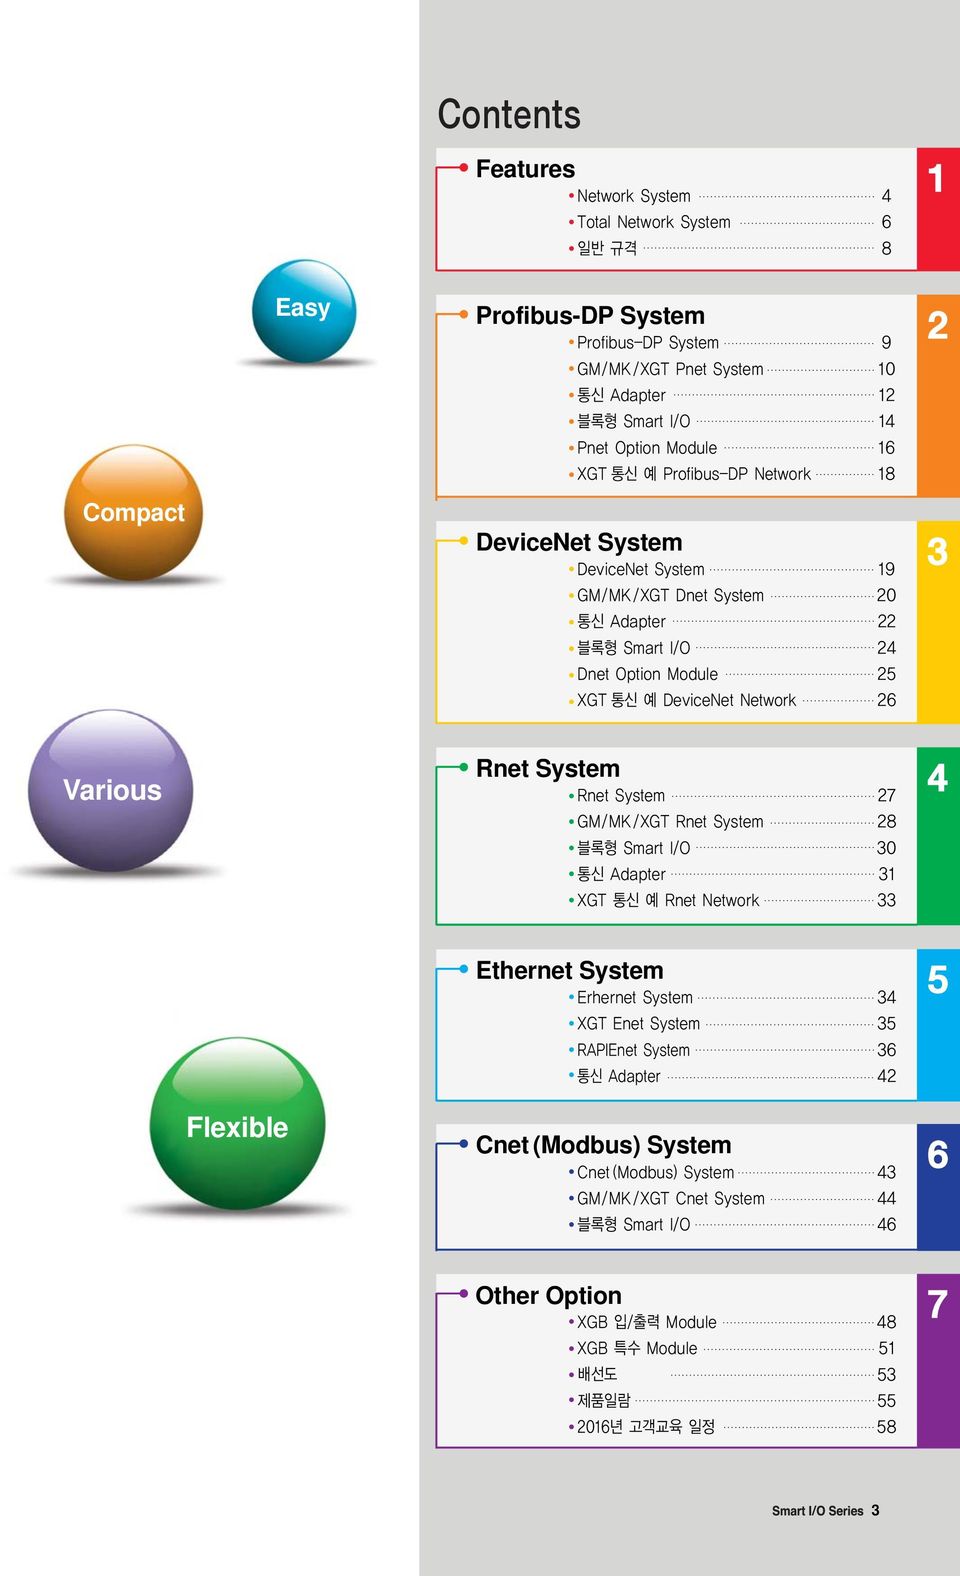 Various Rnet System 4 Ethernet System 5